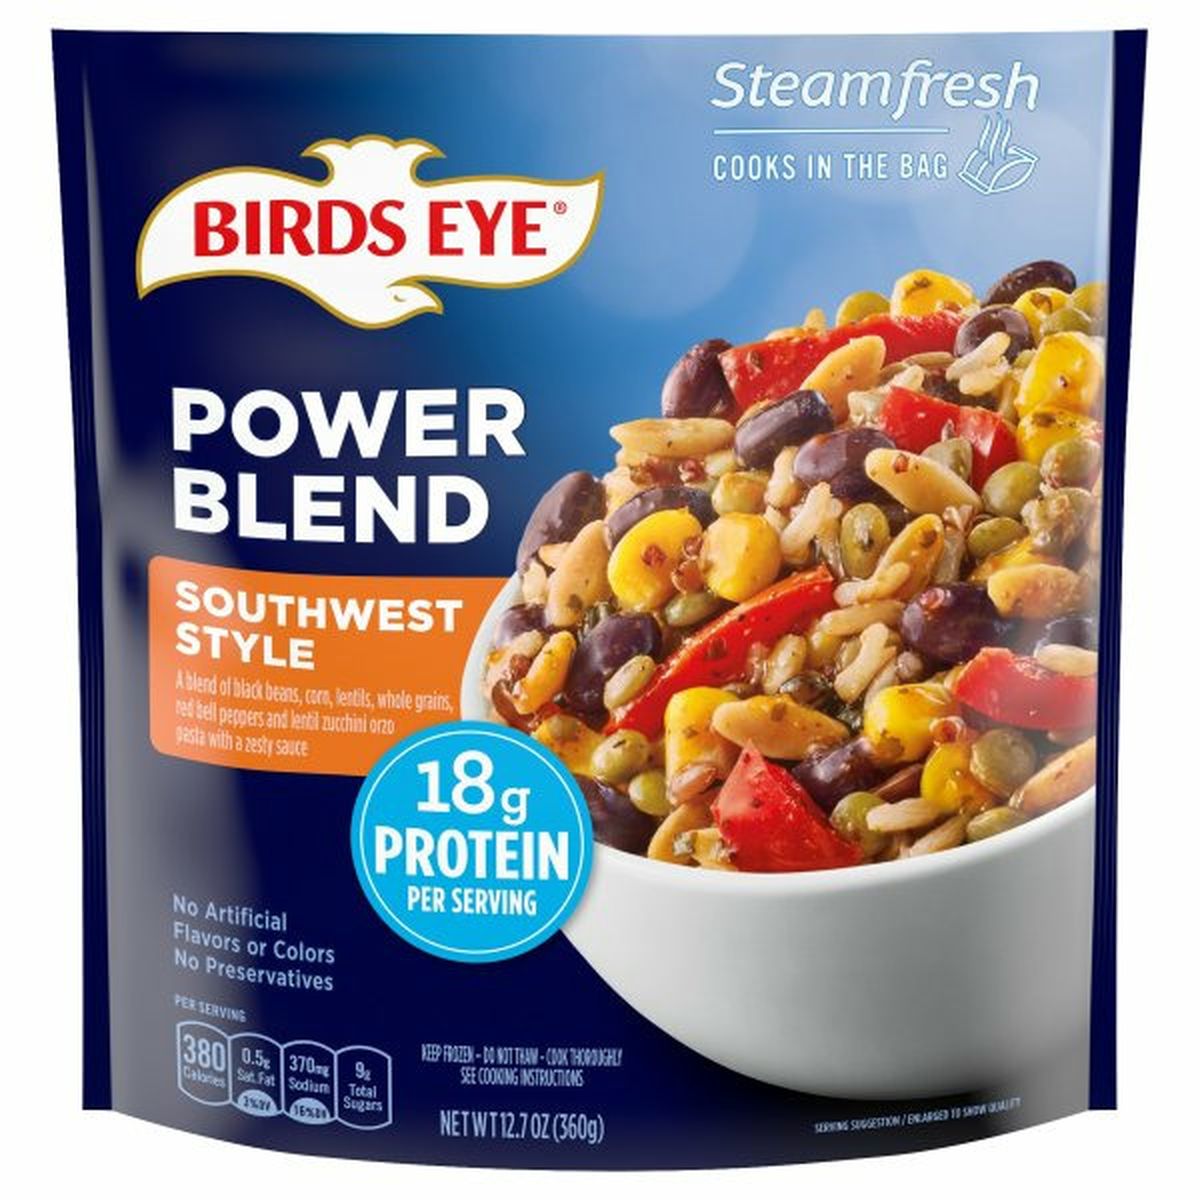 Calories in Birds Eye Steamfresh Power Blend, Southwest Style